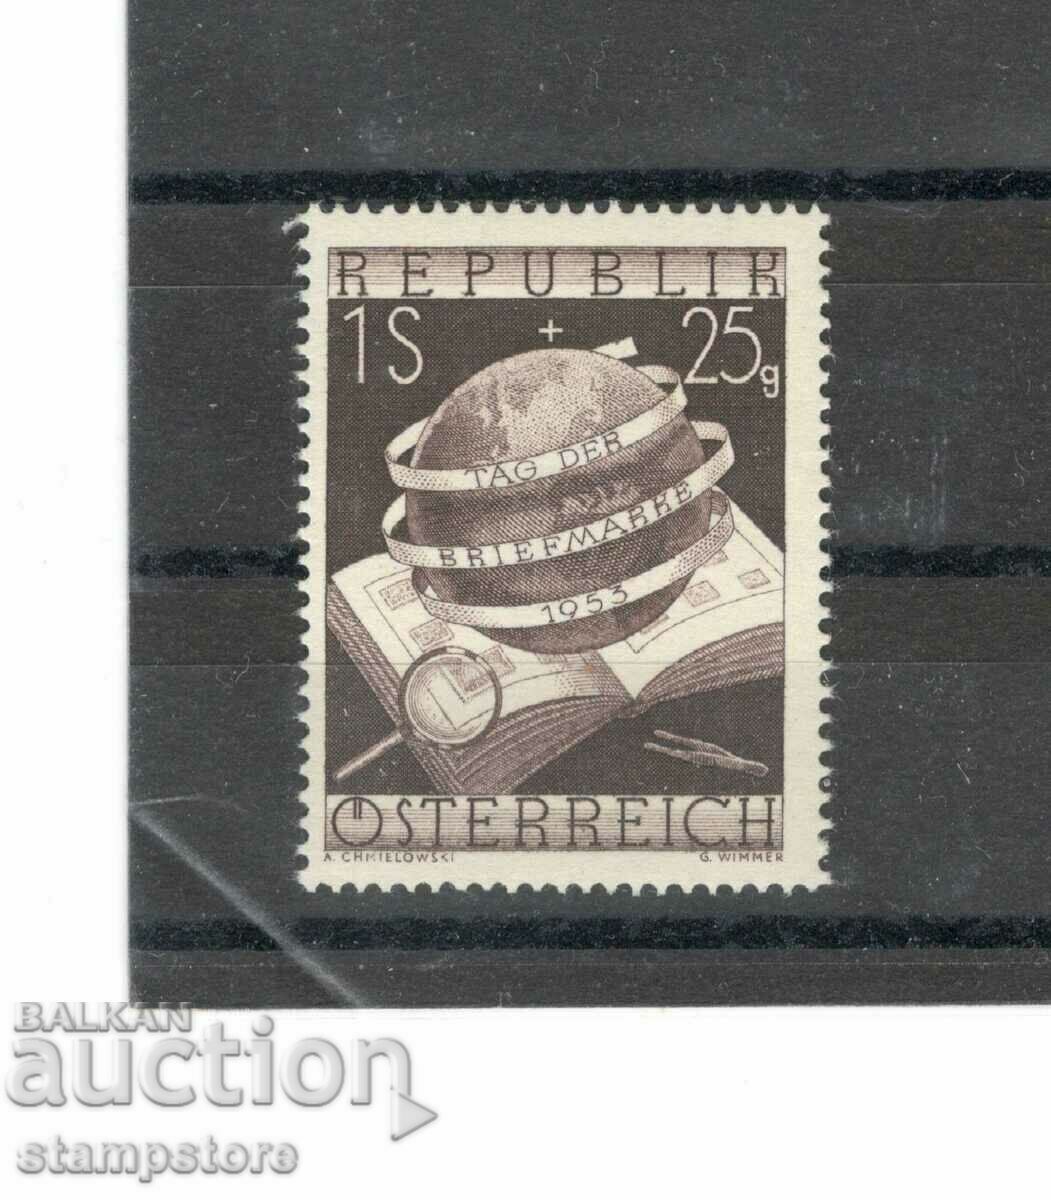 Austria - Postage Stamp Day